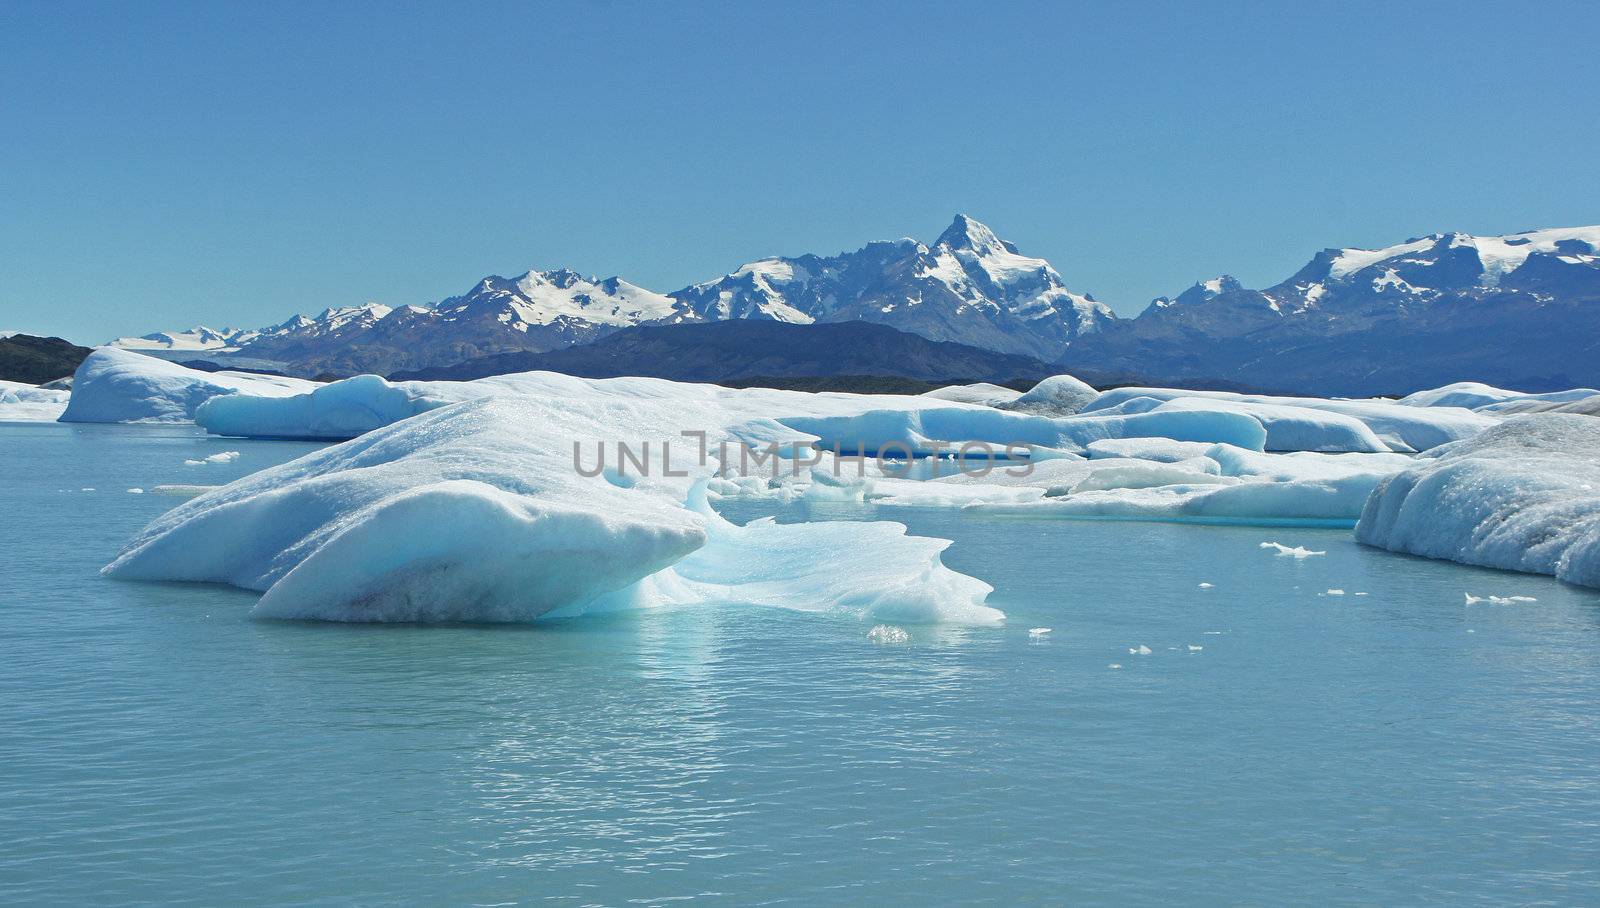 Famous national parc Los Glaciares, Patagonia, Argentina